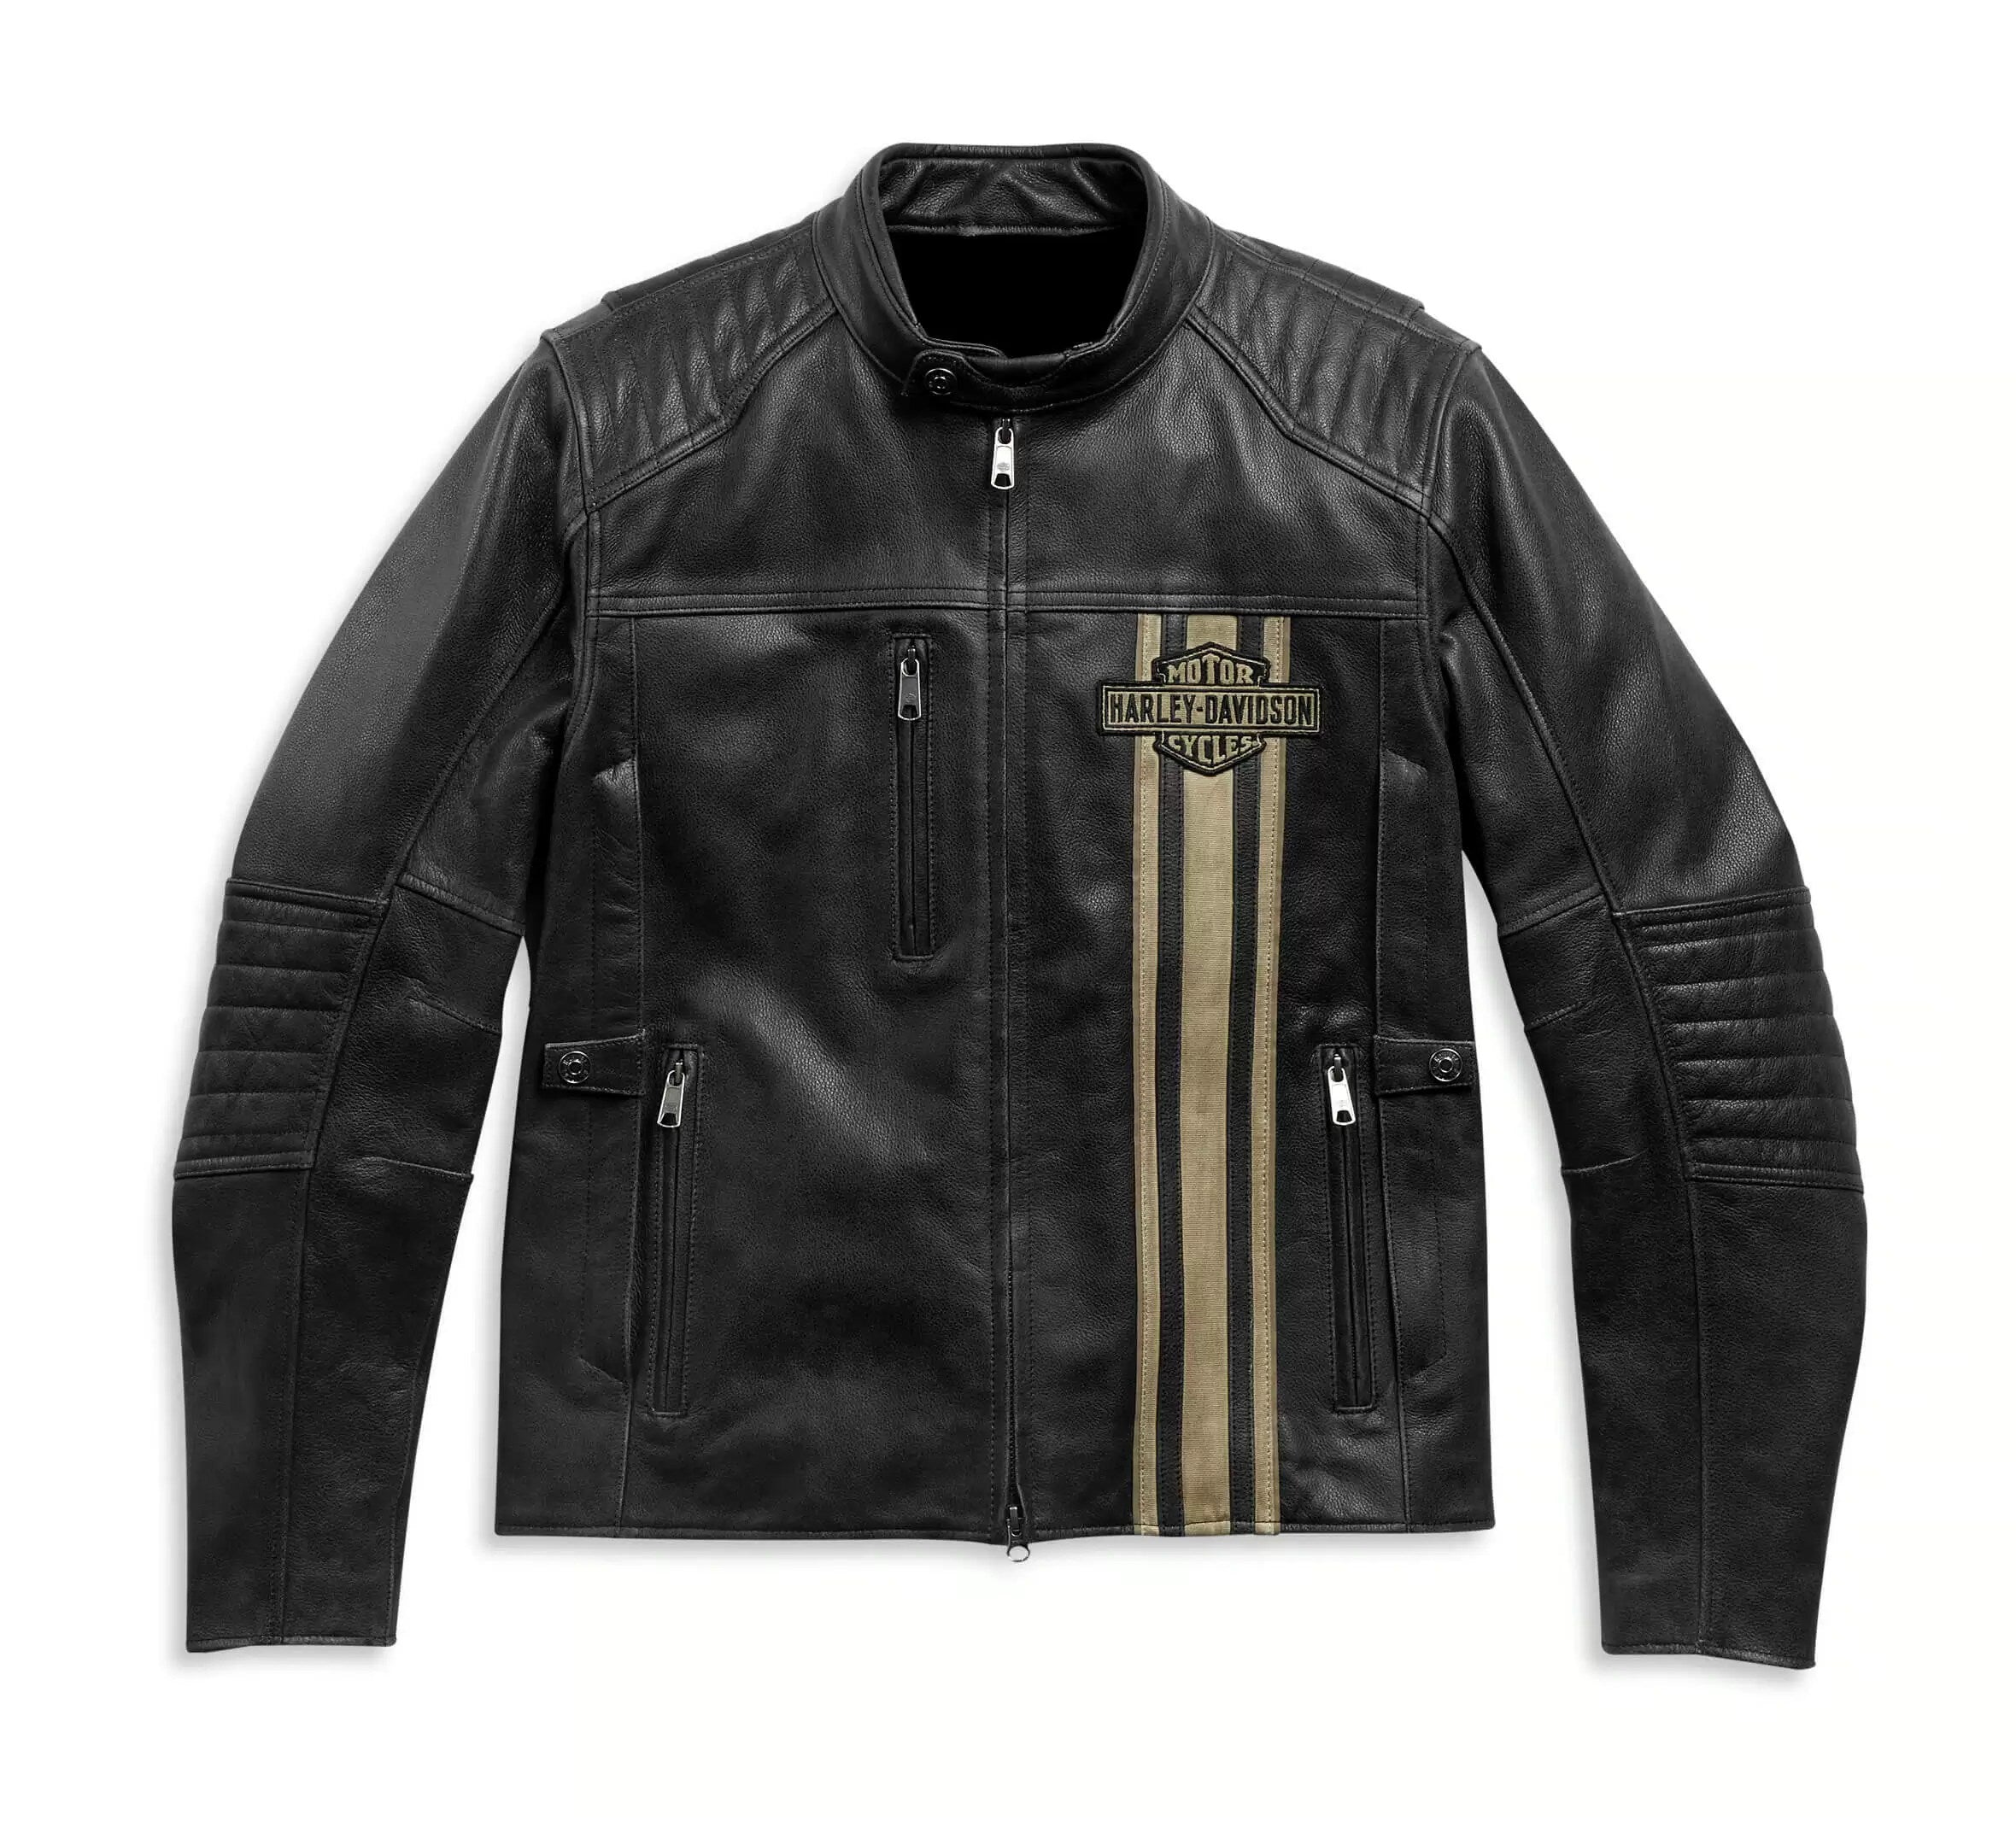 Motorcycle Harley Davidson Leather Jacket in Black